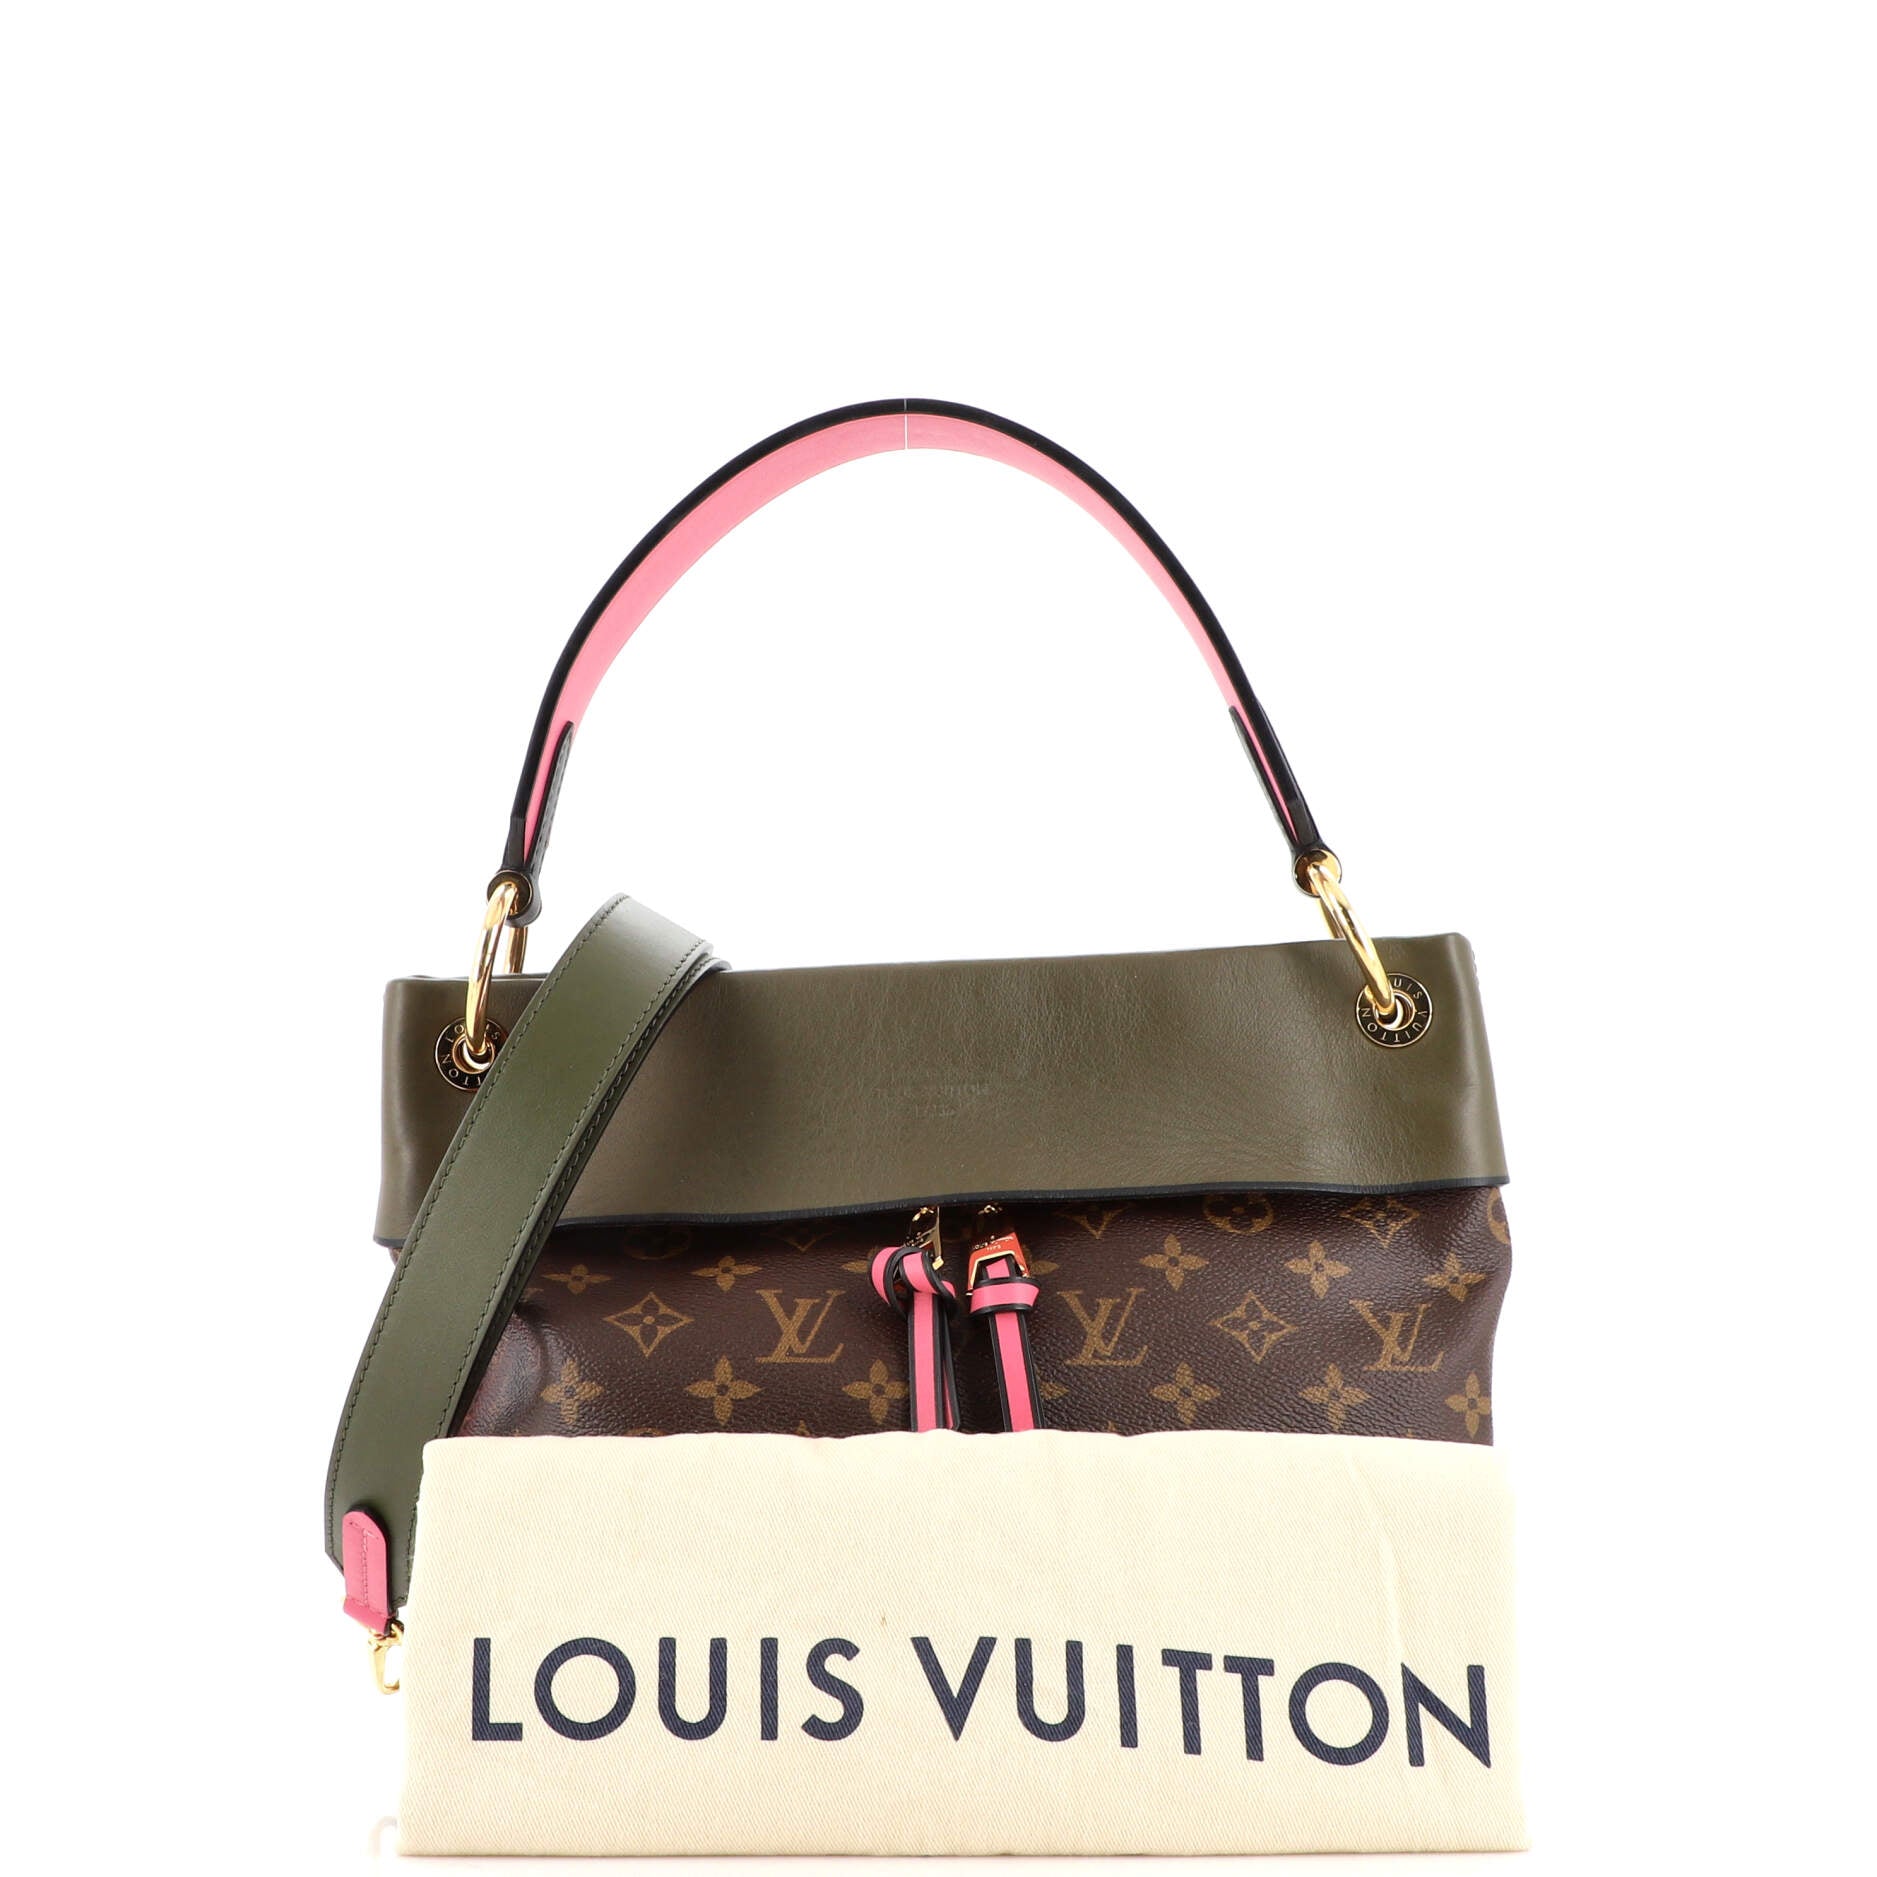 Saks OFF 5TH Louis Vuitton Damier Ebene Canvas Barrel Bag $1299.99